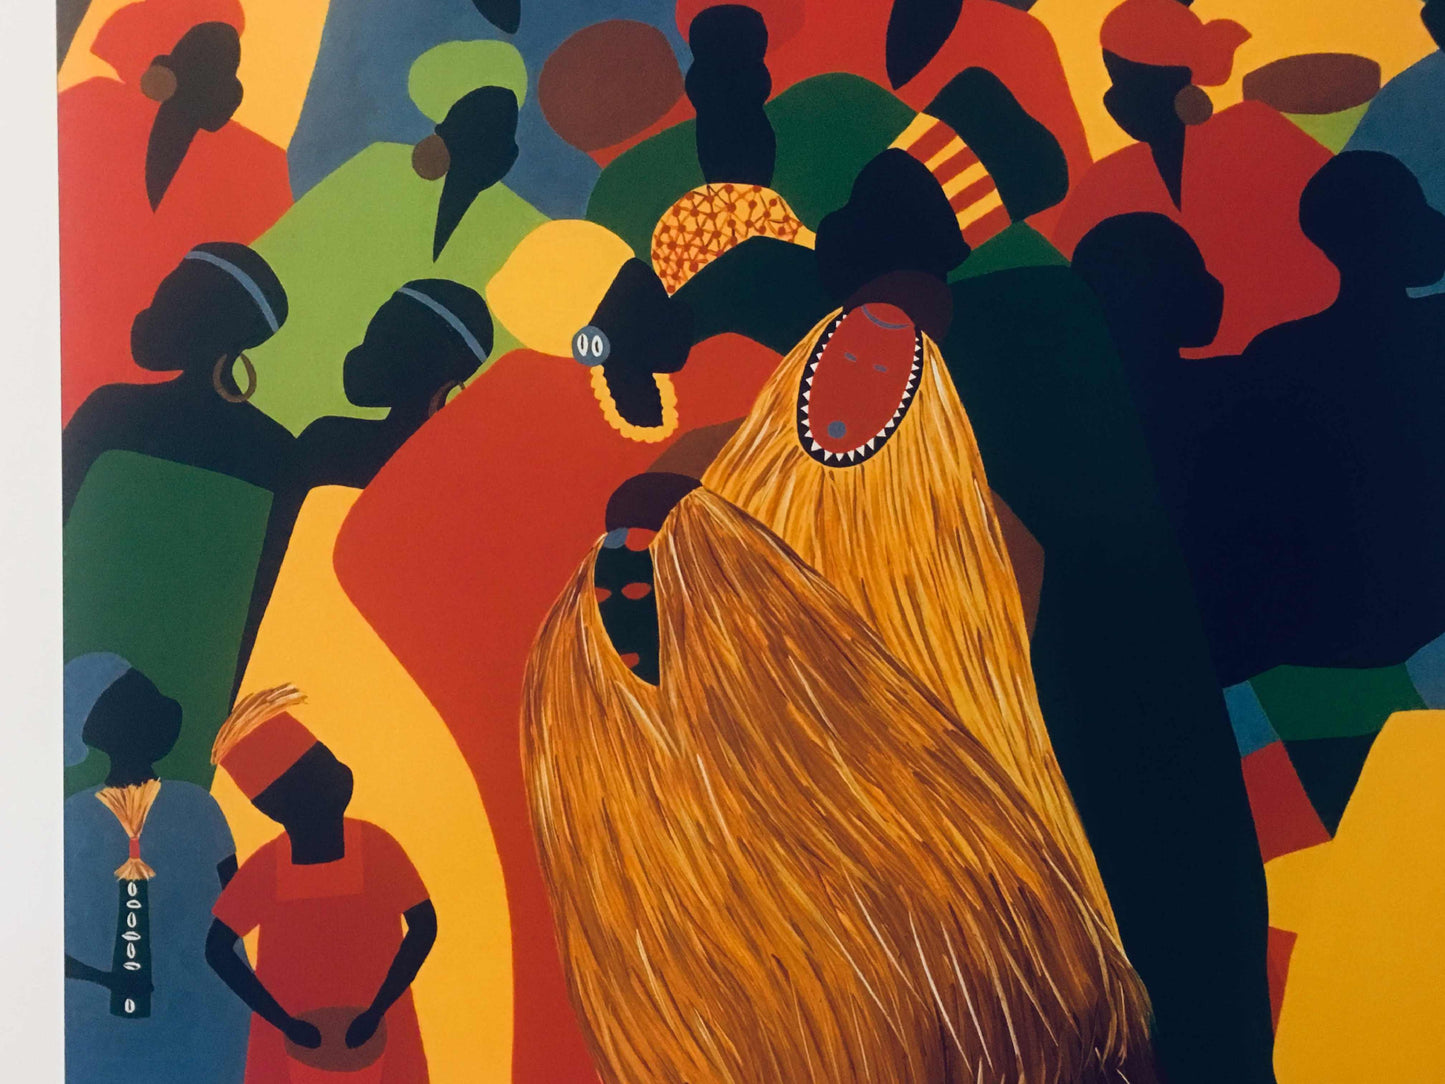 1996 Black Heritage Art Show “Celebration” Poster by Synthia Saint James